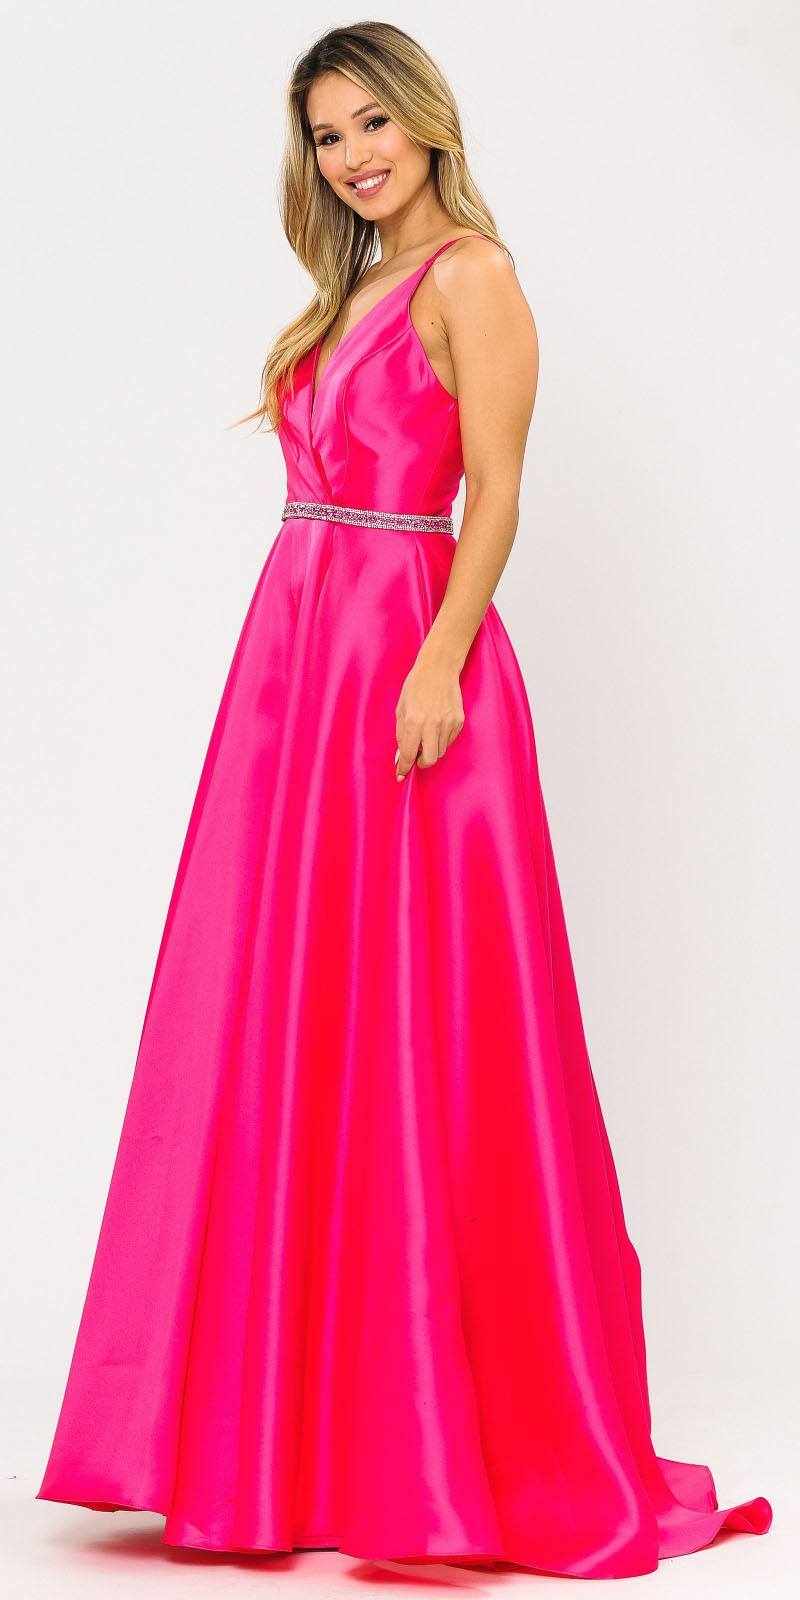 Poly USA 8690 V-Neck Long Prom Dress Fuchsia with Pockets